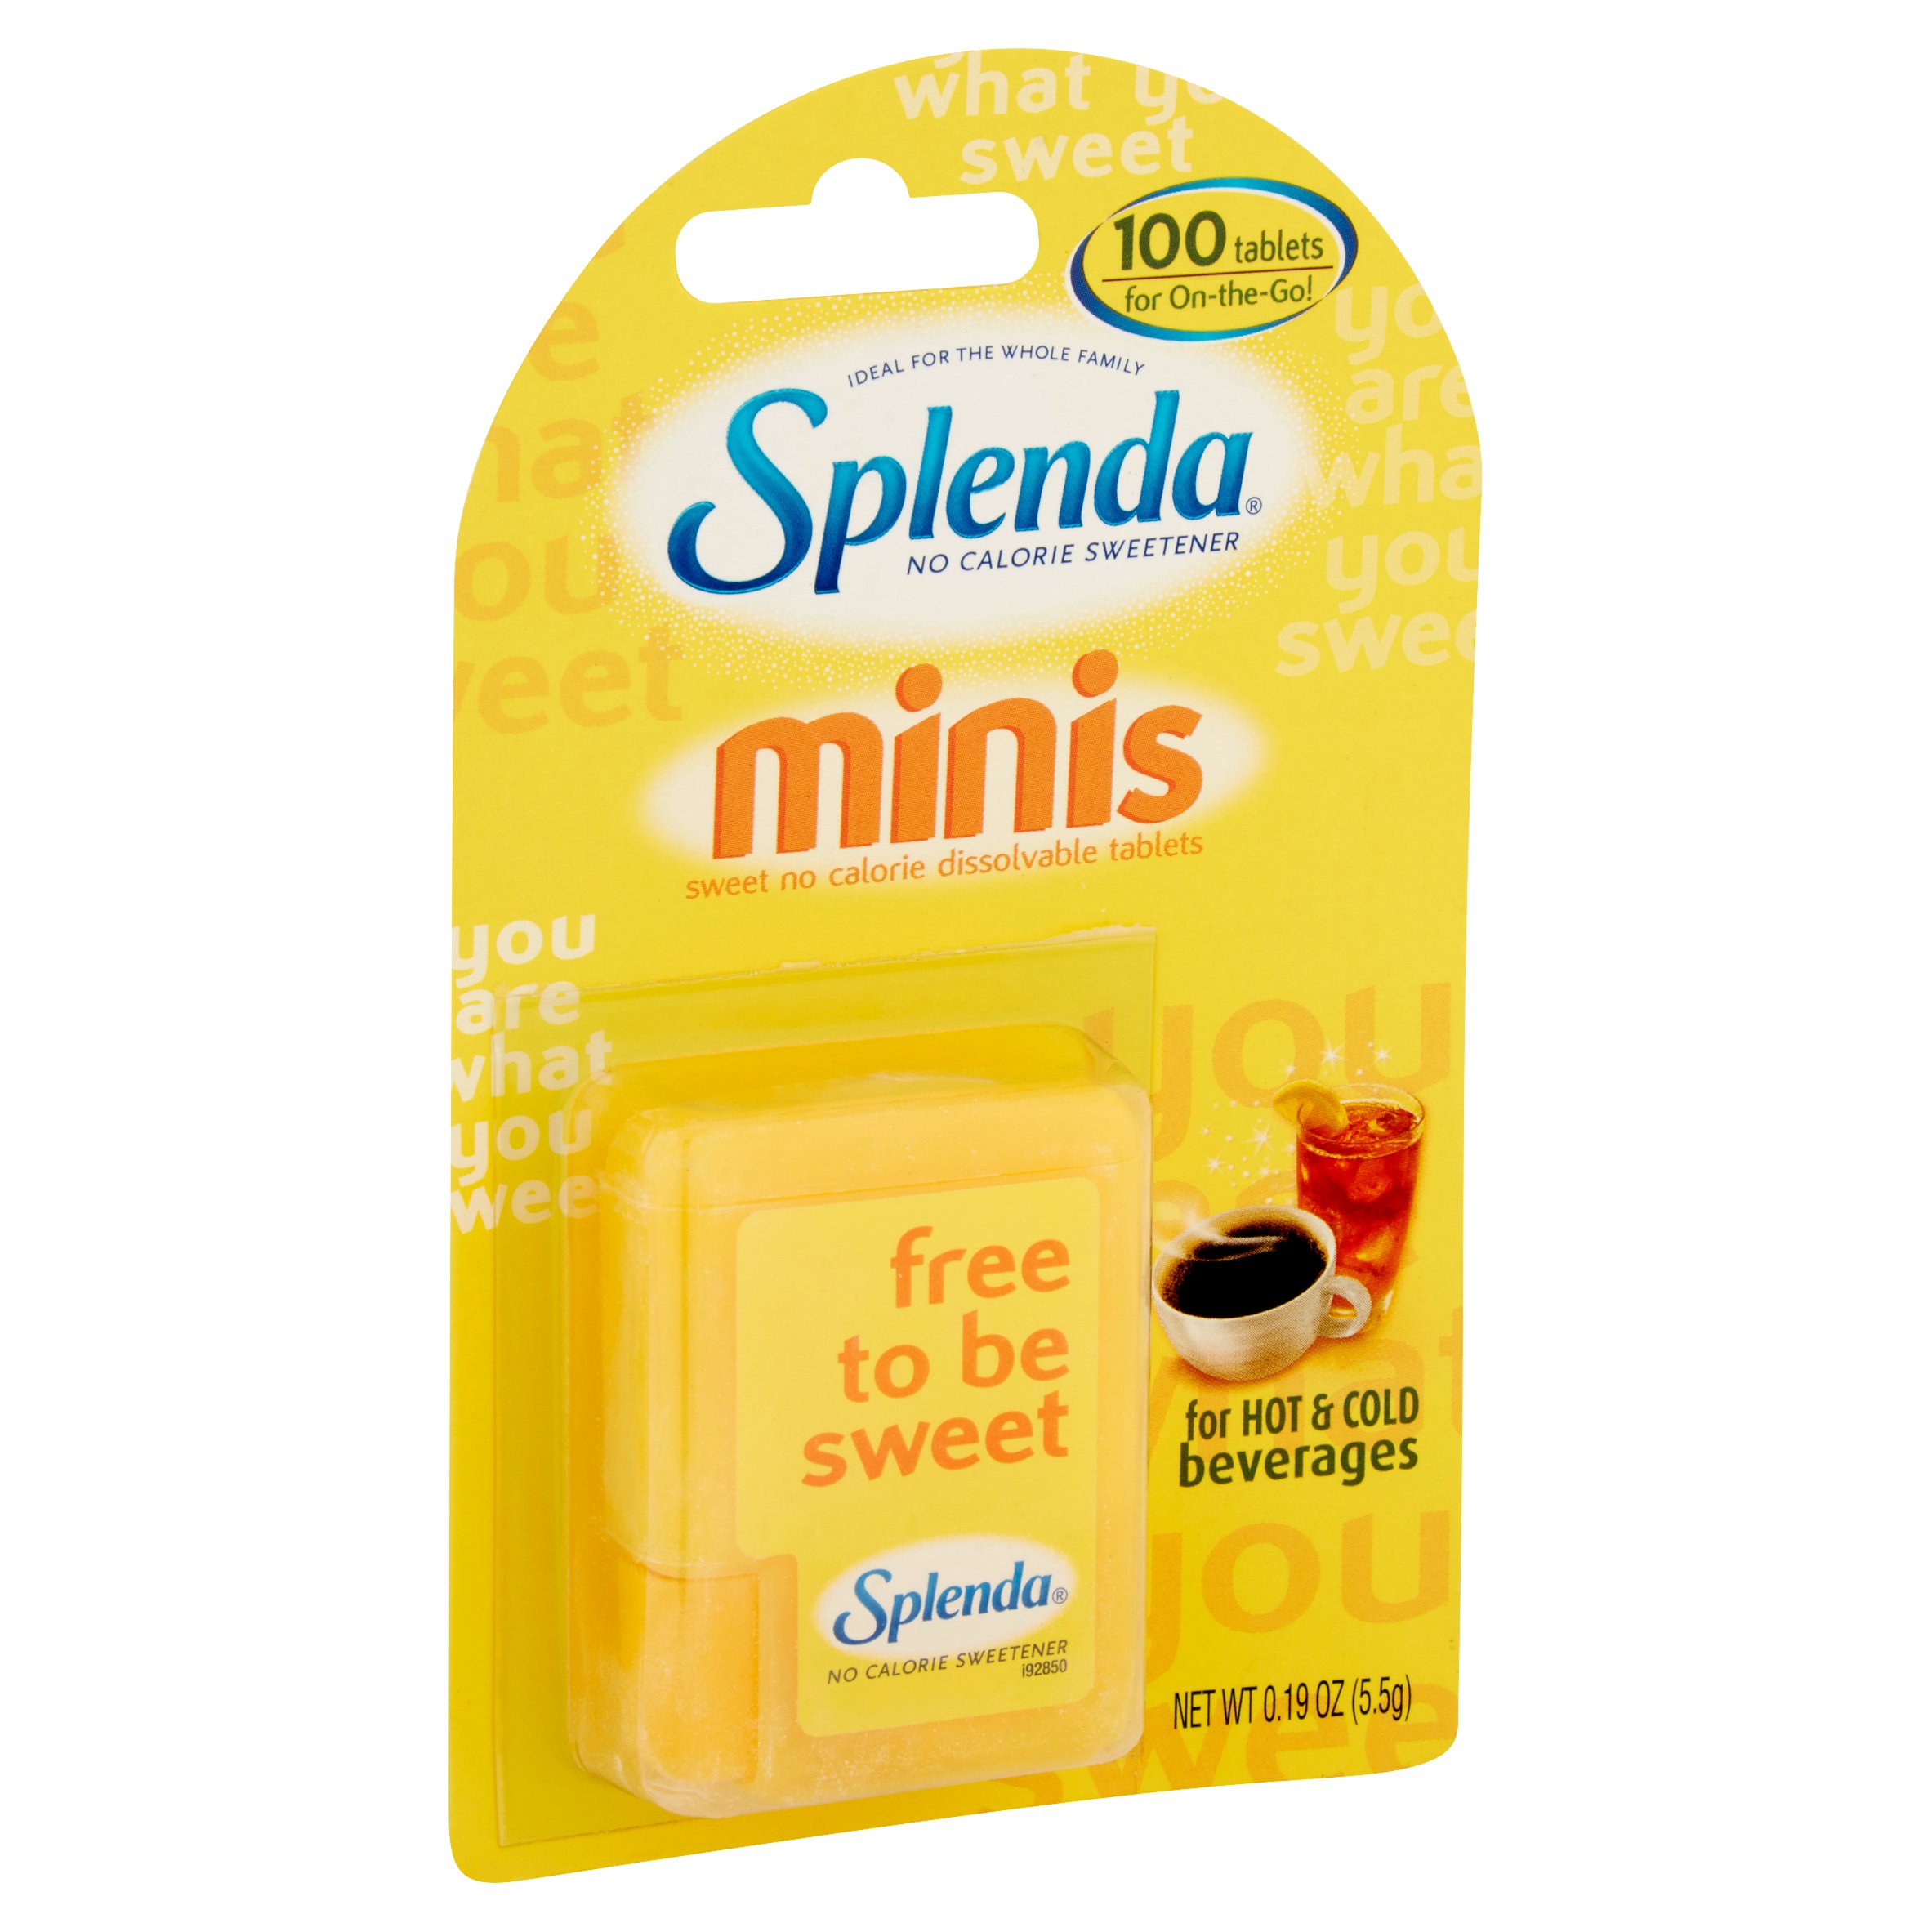 Splenda No Calorie Sweetener Minis Dissolvable Tablets, 100 ct. - image 5 of 5